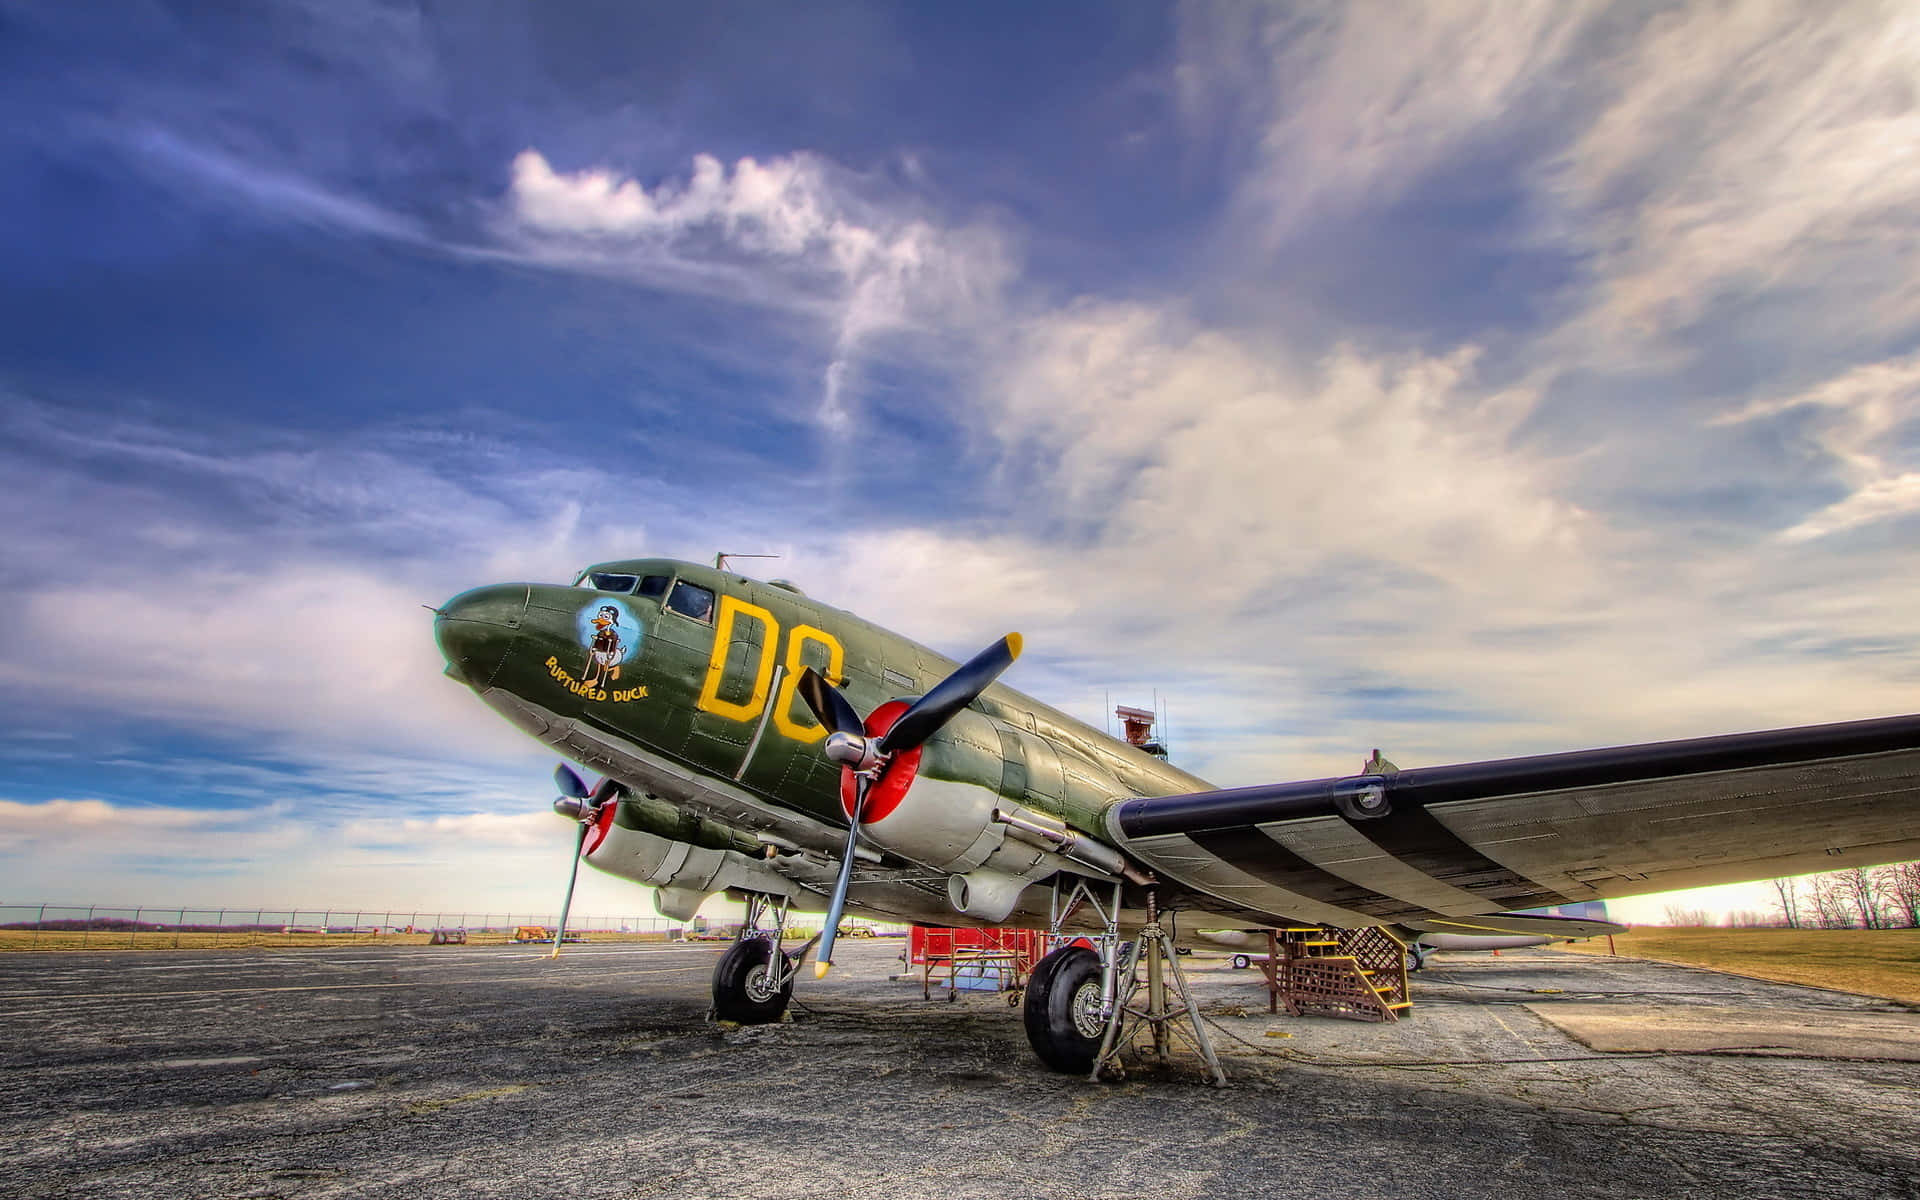 Caption: Pristine Vintage Airplane Soaring The Sky Wallpaper